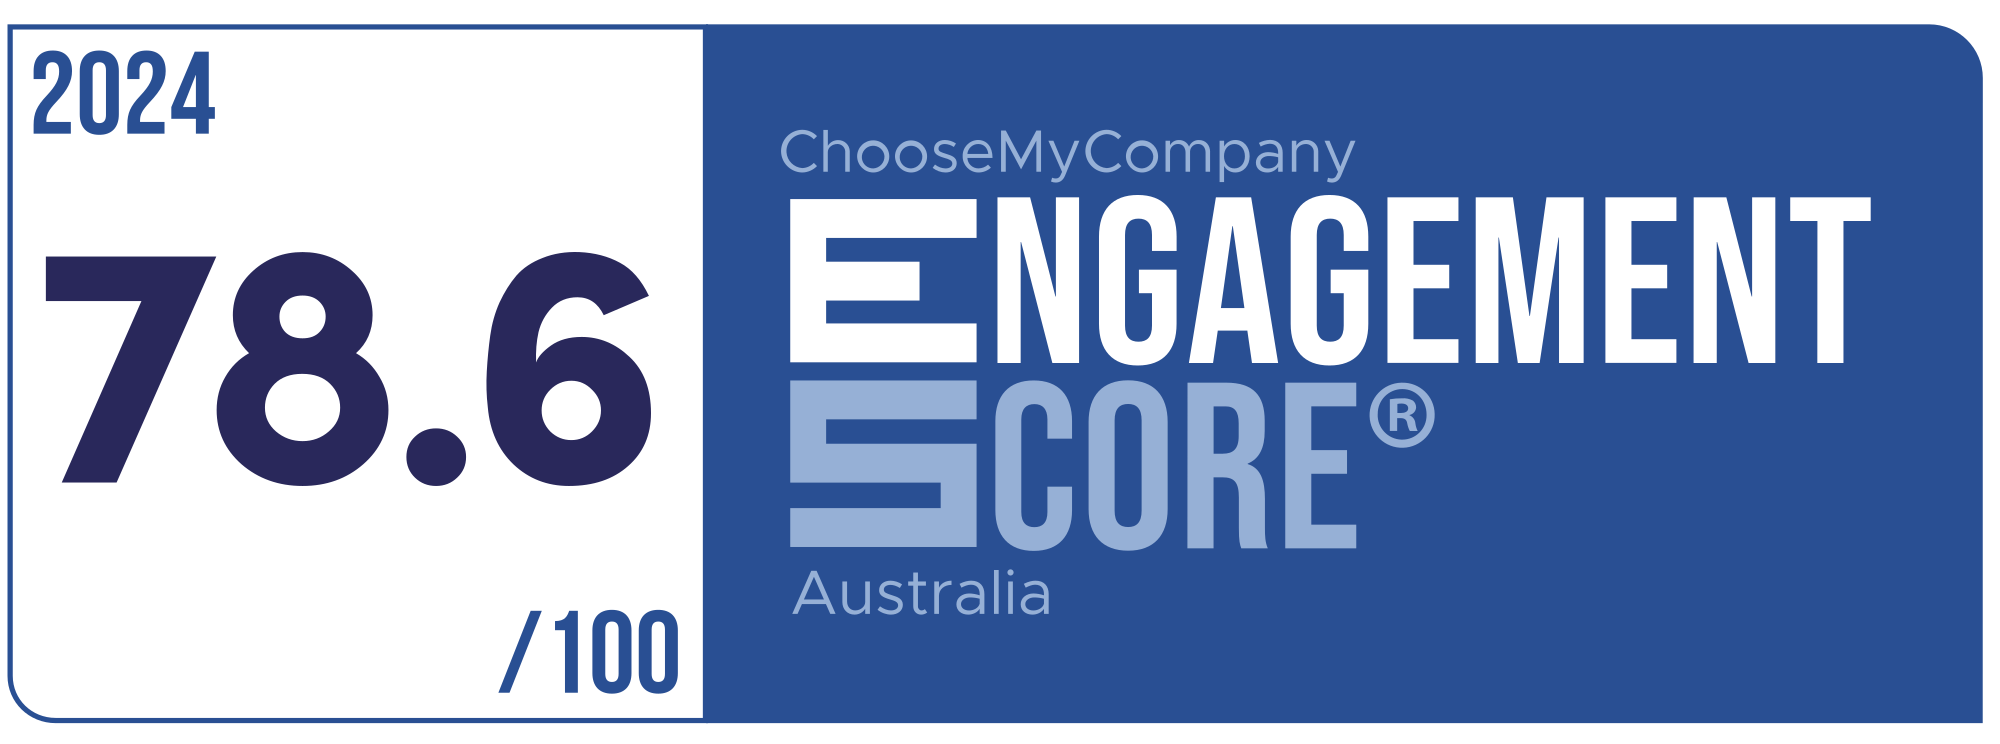 Label Engagement Score 2024 Australia